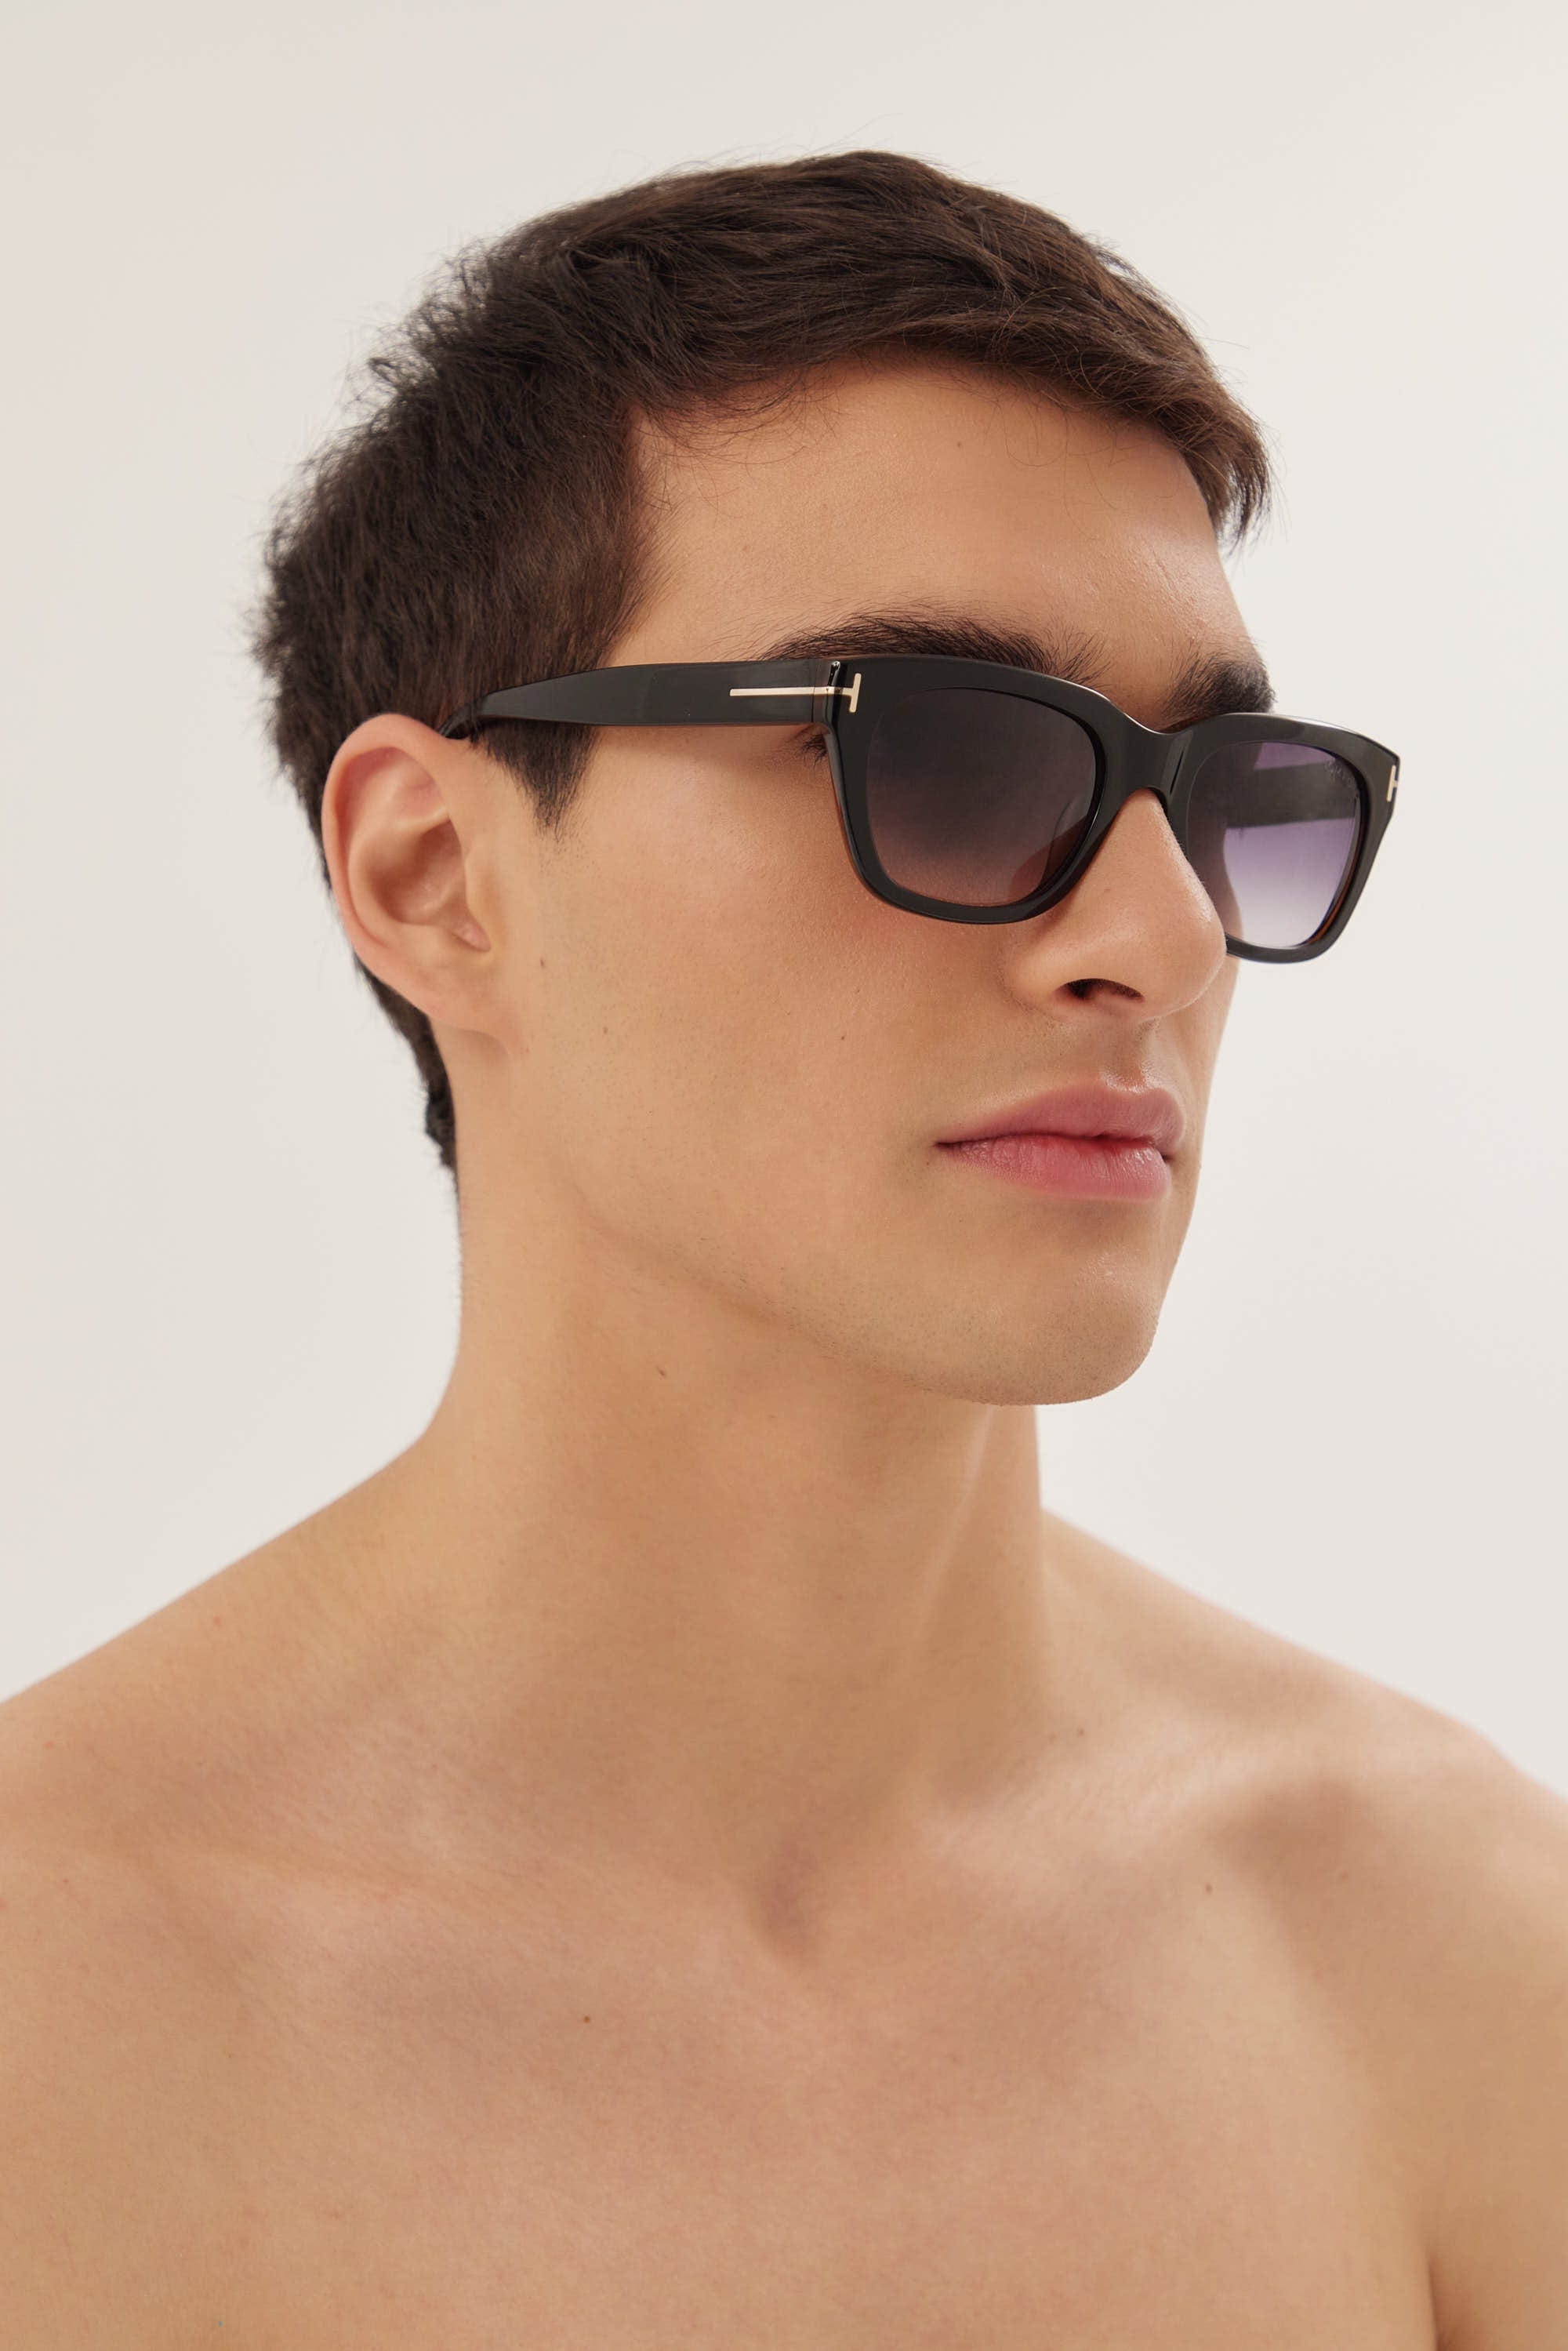 Tom Ford classic black sunglasses